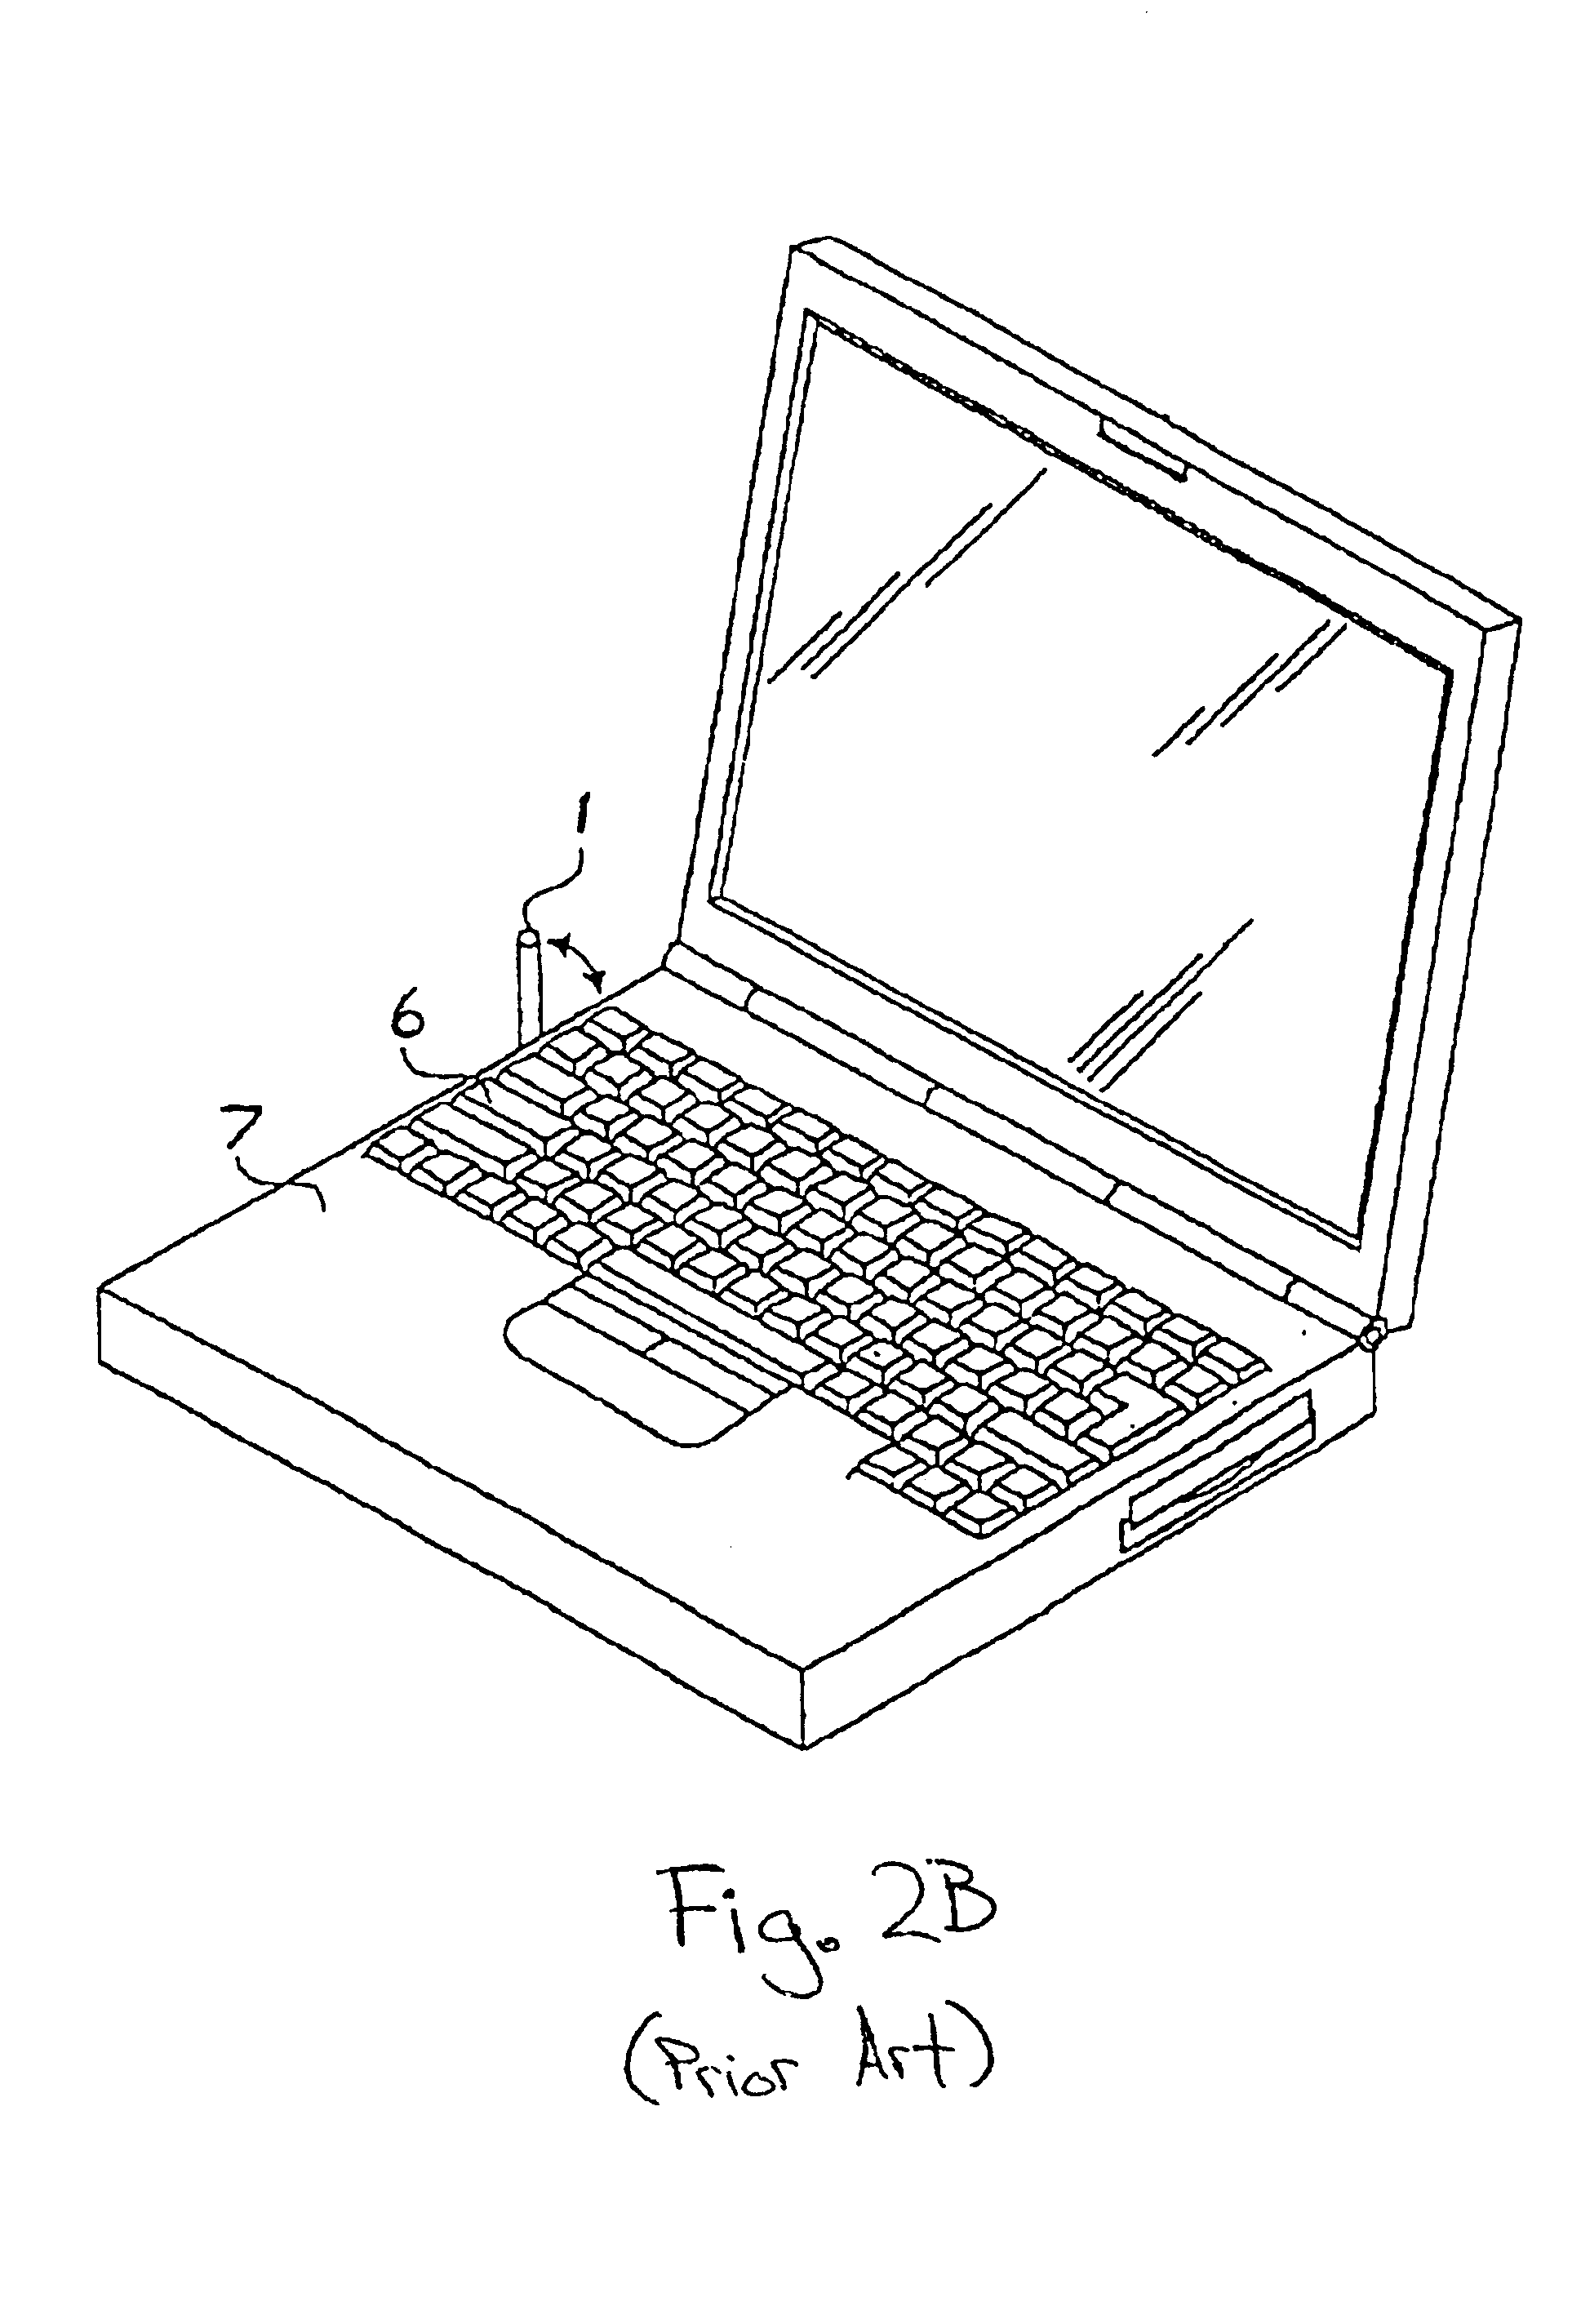 Display device, computer terminal, and antenna